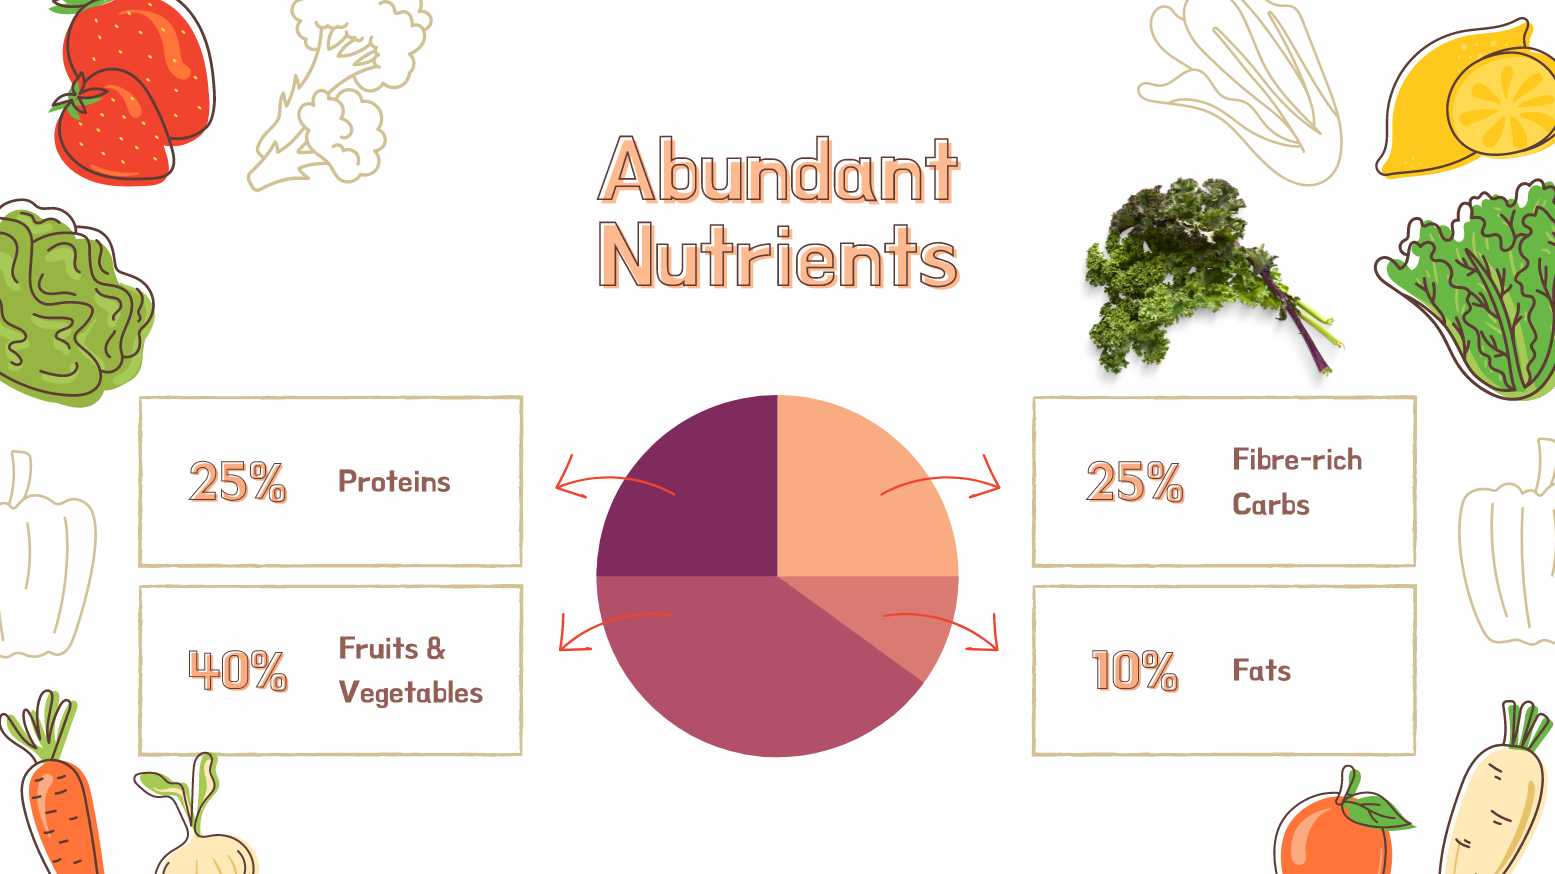 Abundant Nutrients